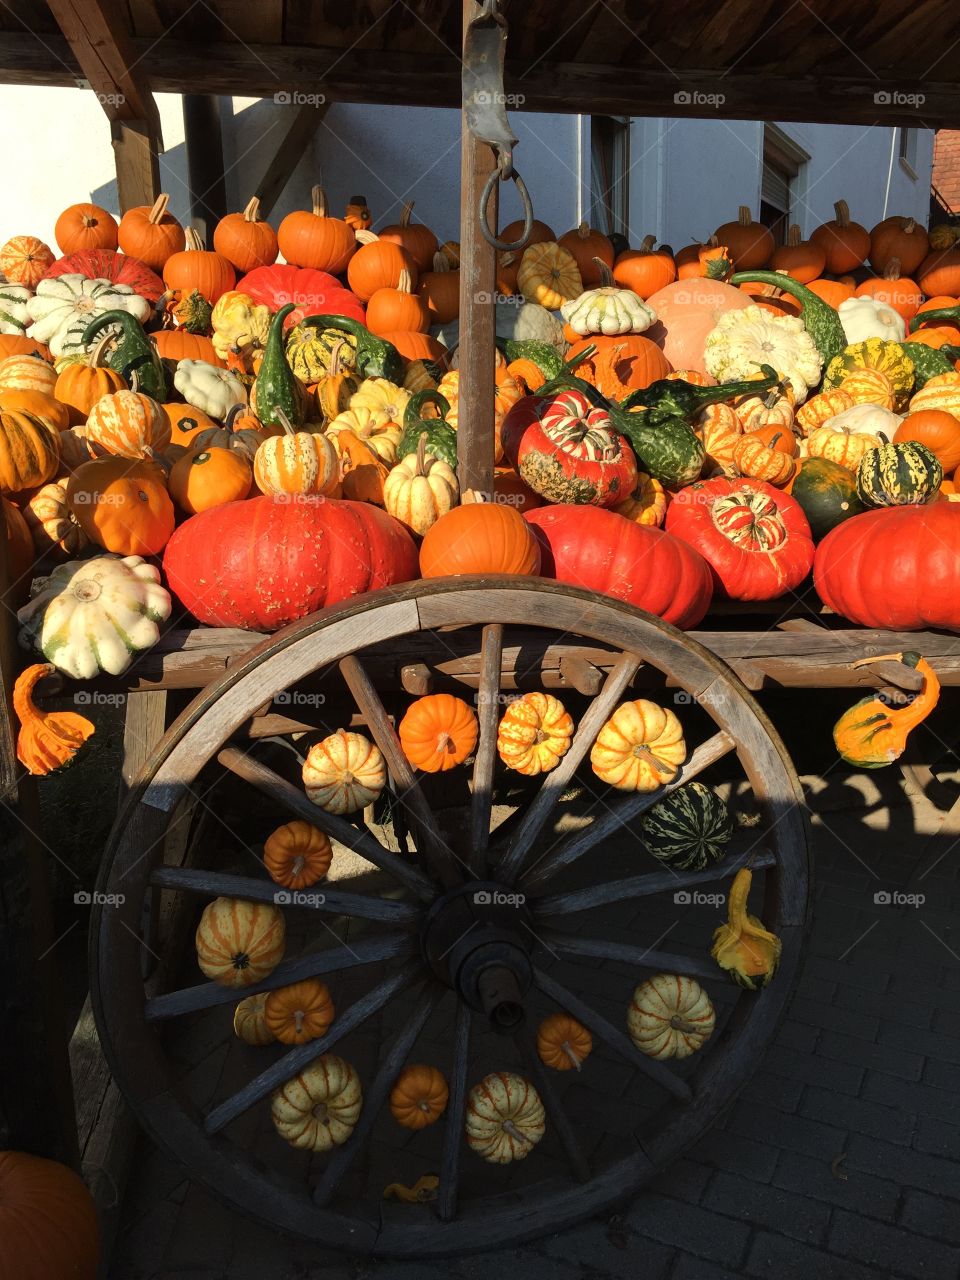 Pumpkins in a Wagon 